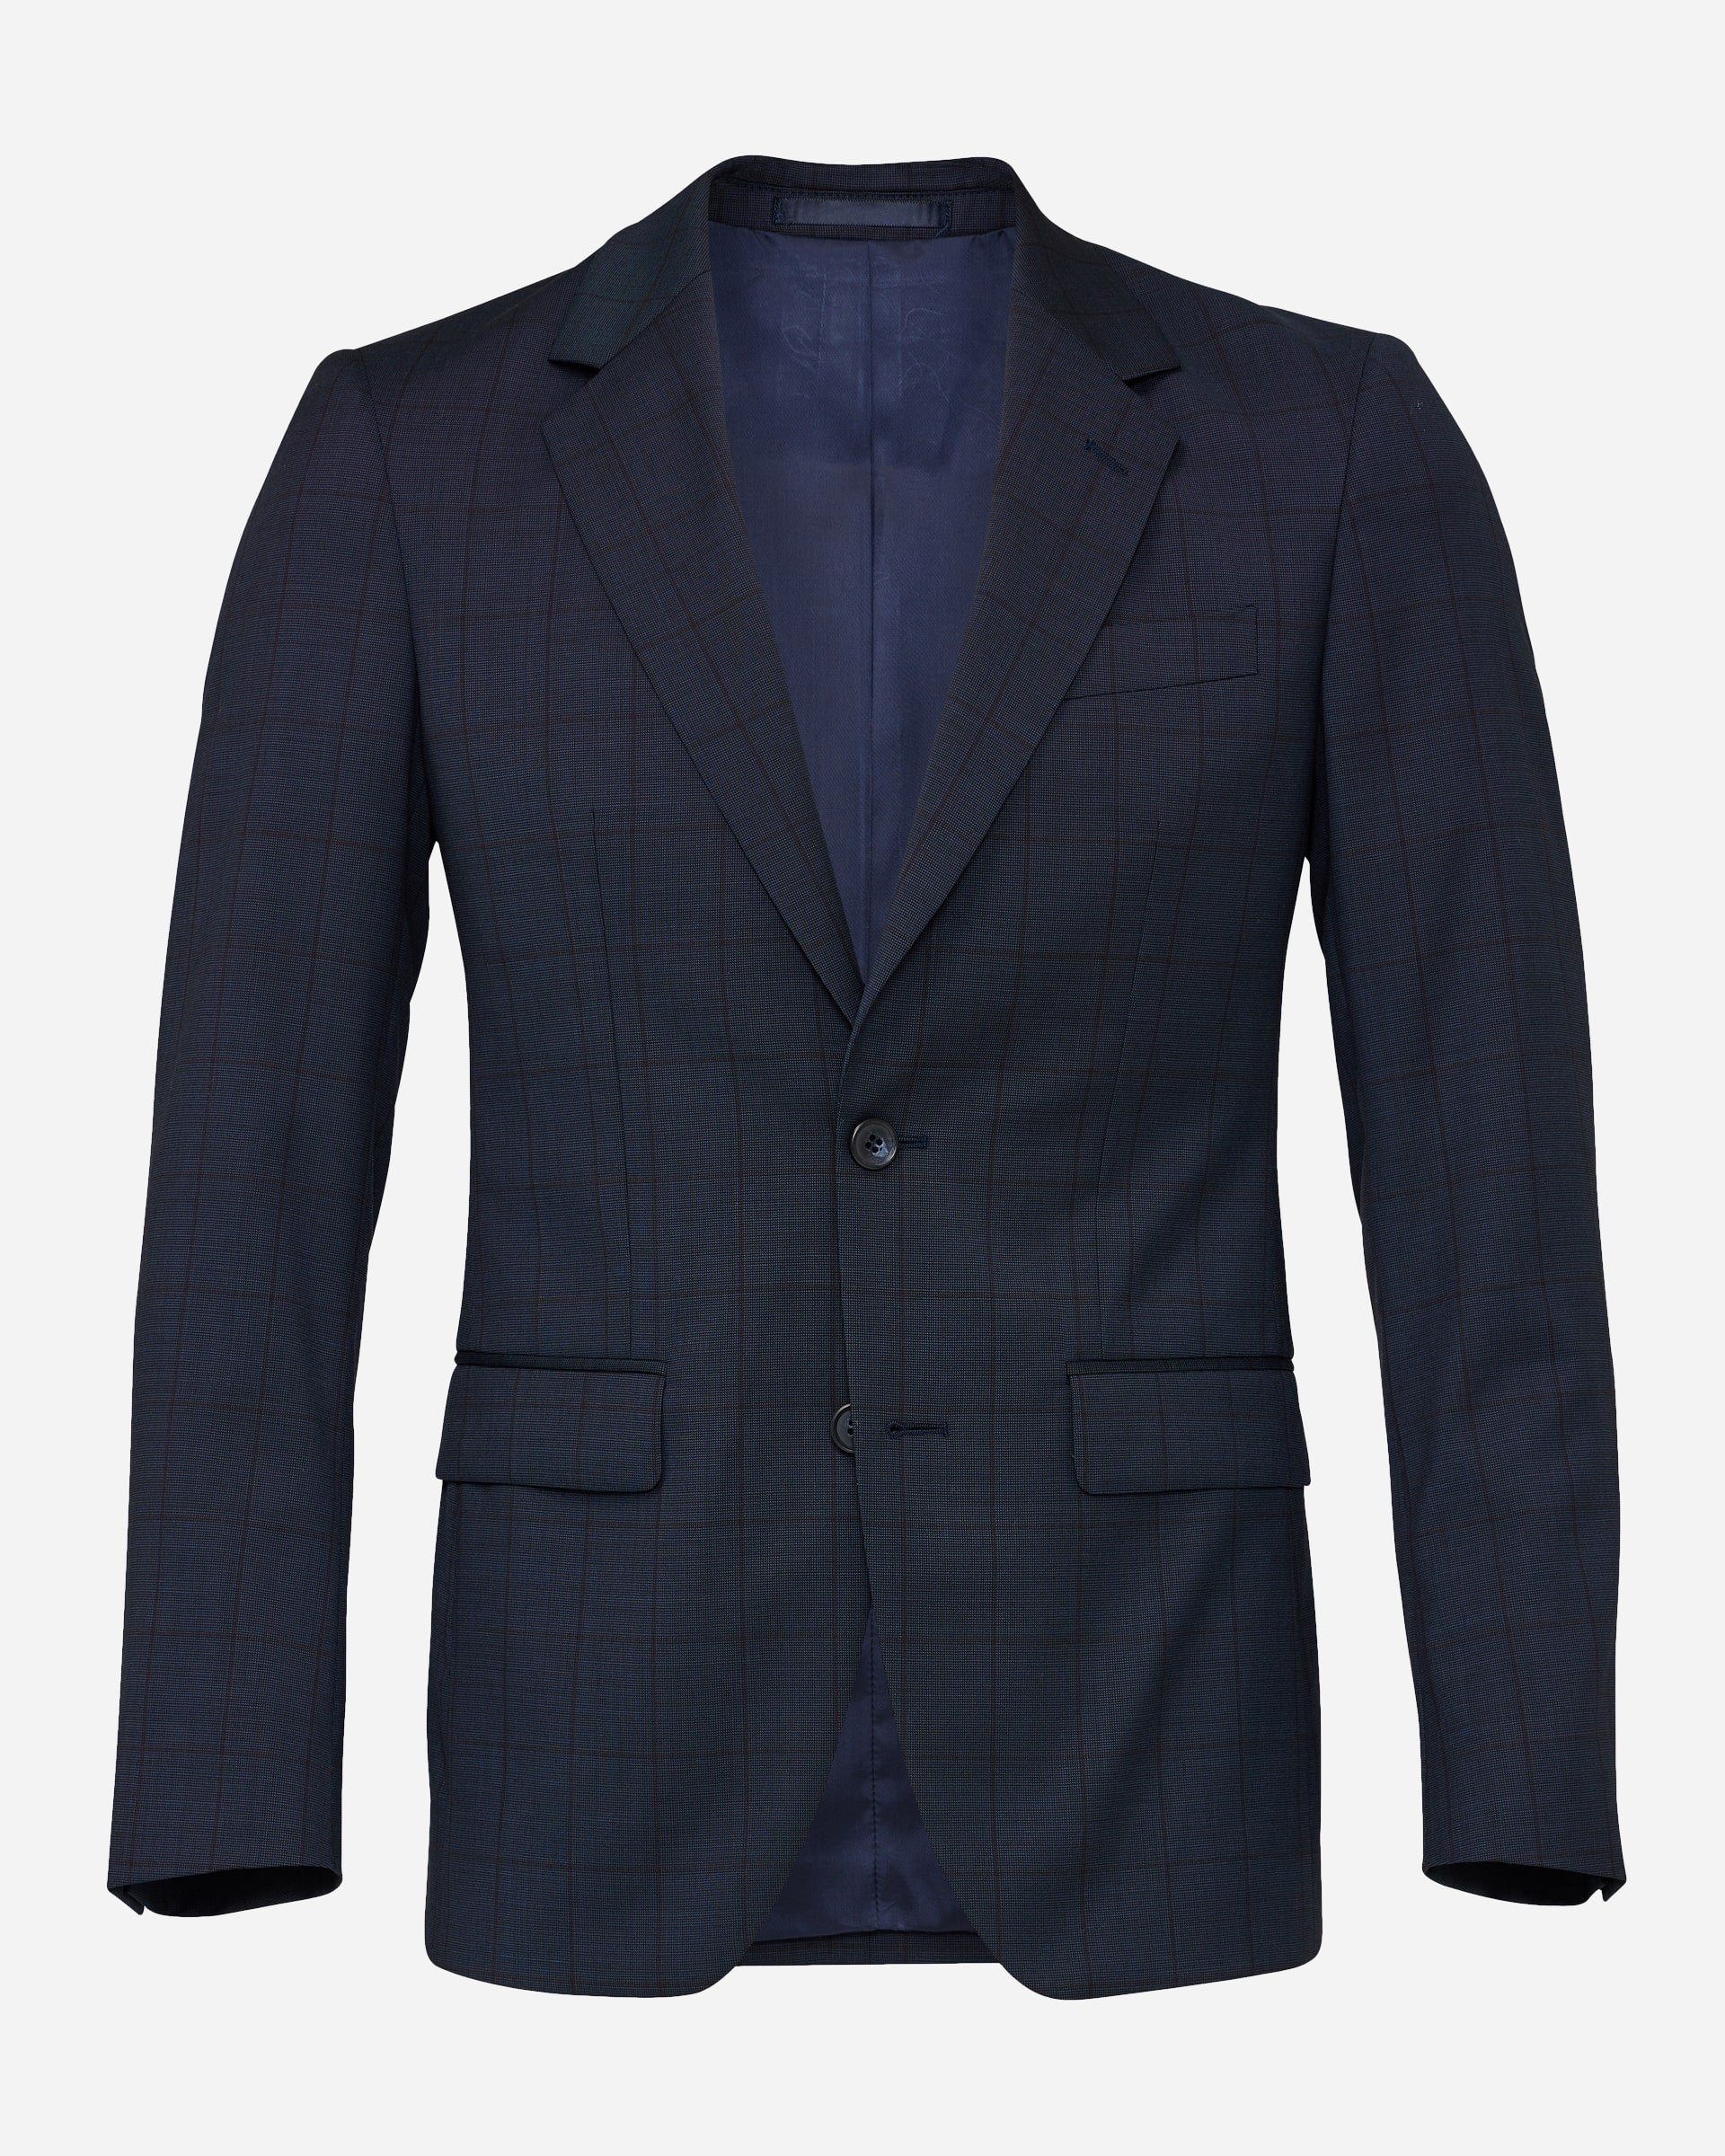 Tailored Suit Check - Men's Suits at Menzclub